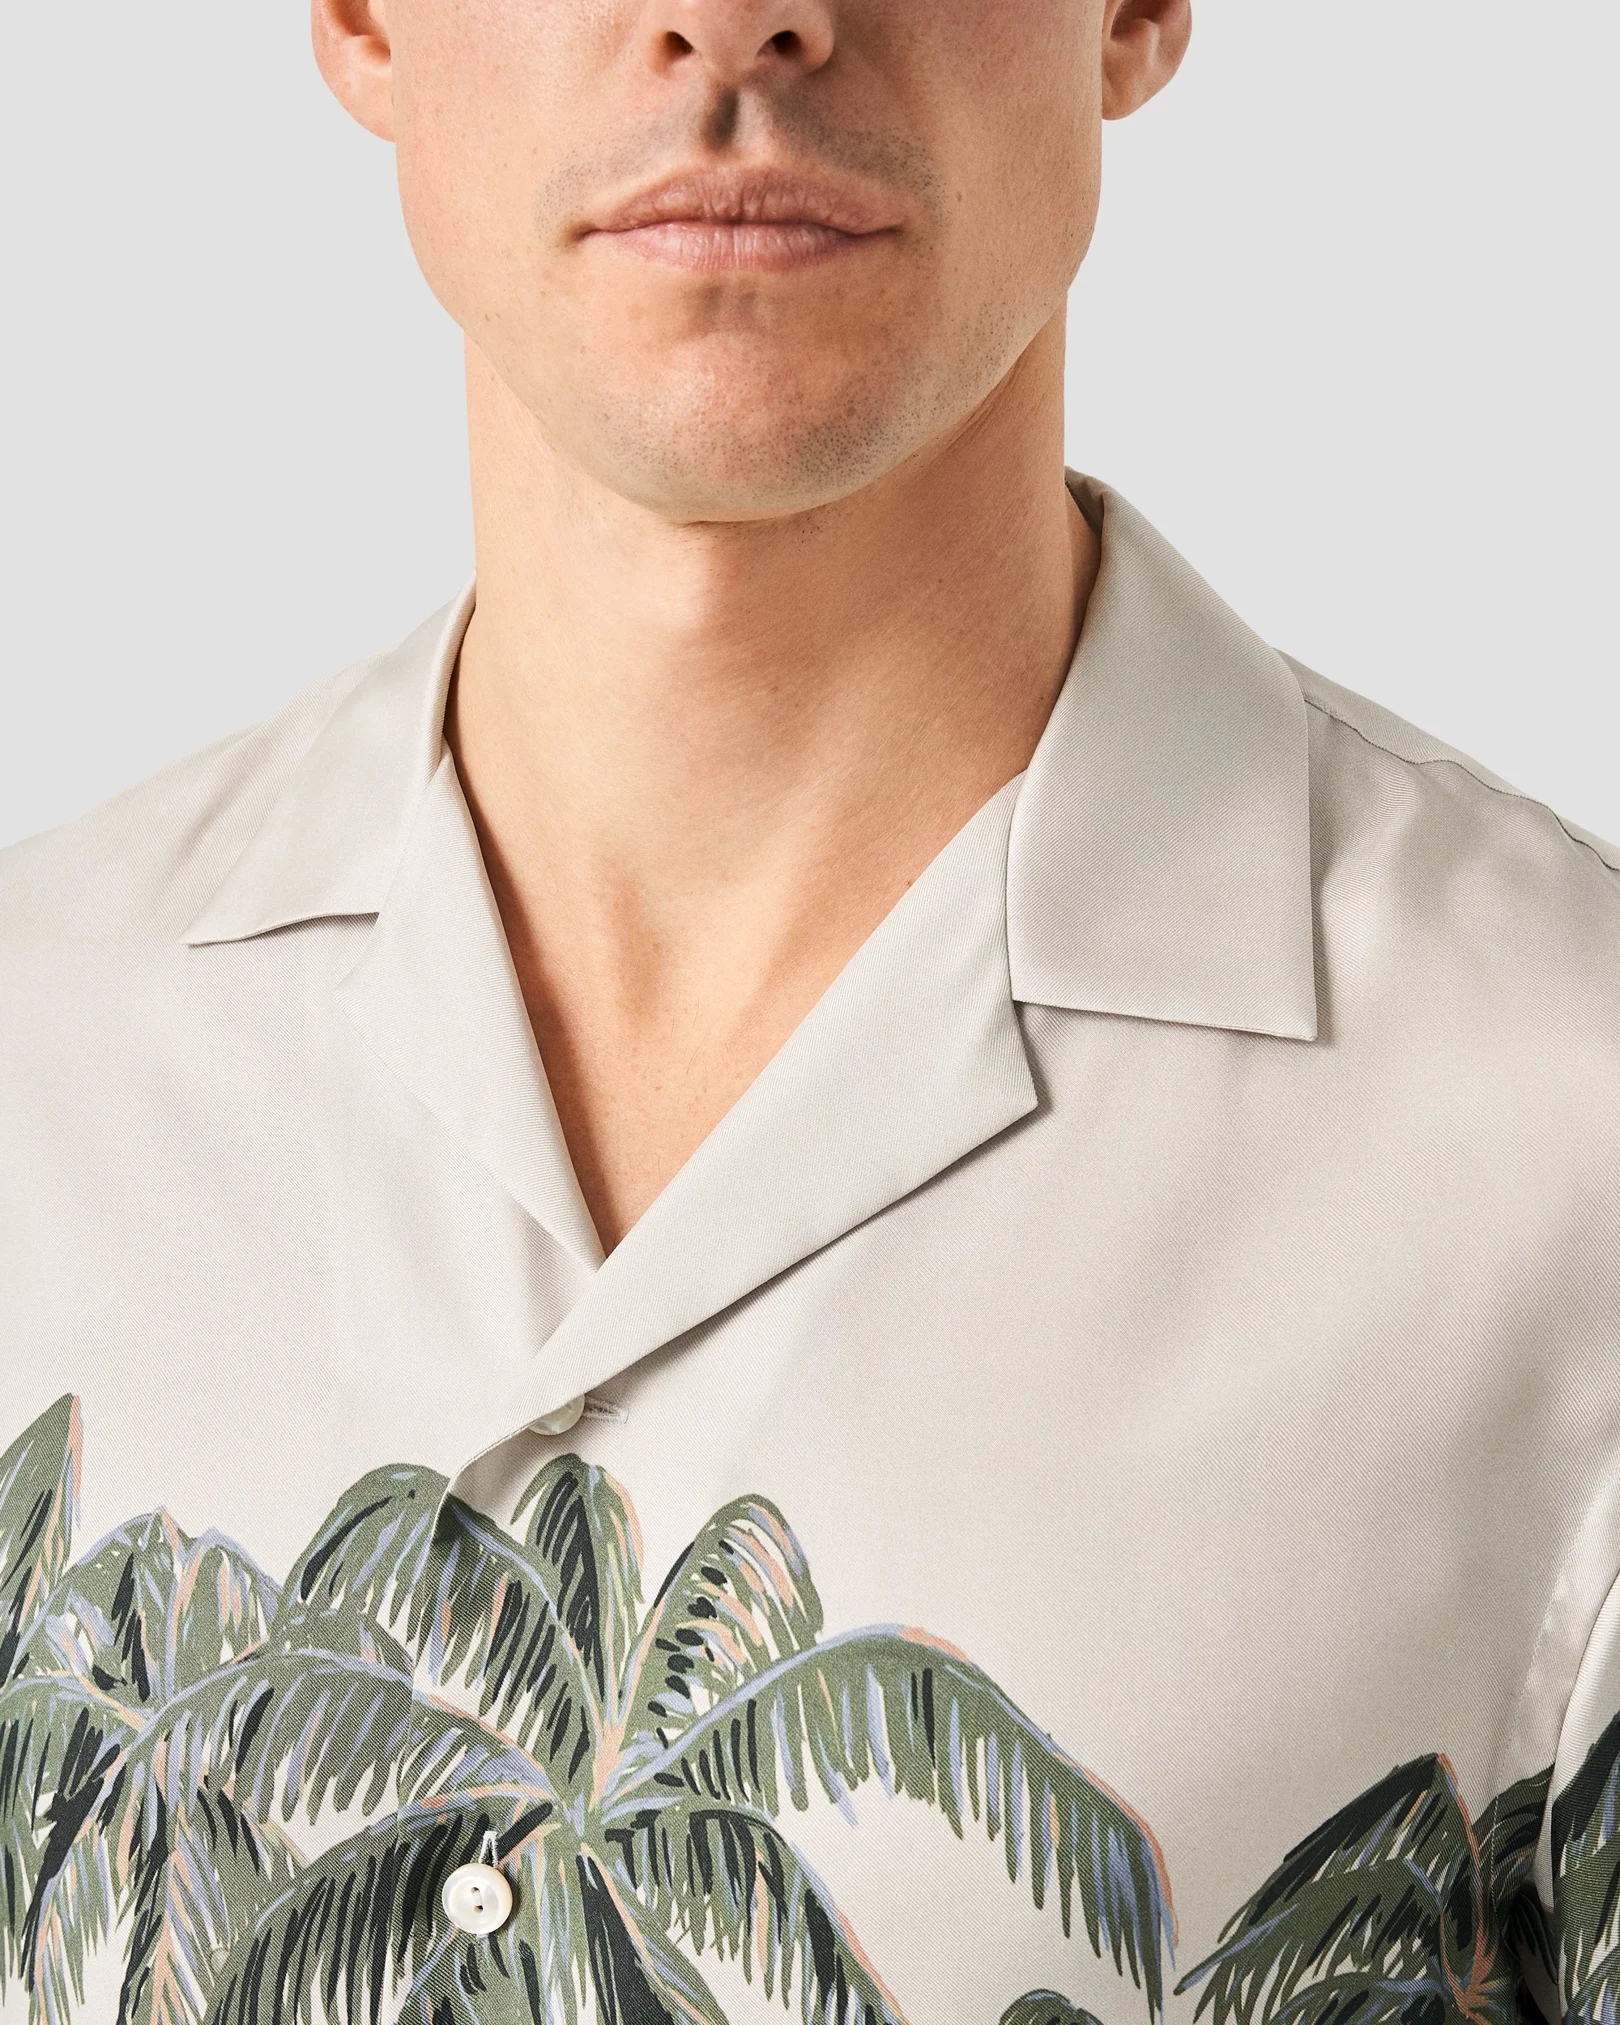 Eton - light green palm tree resort shirt